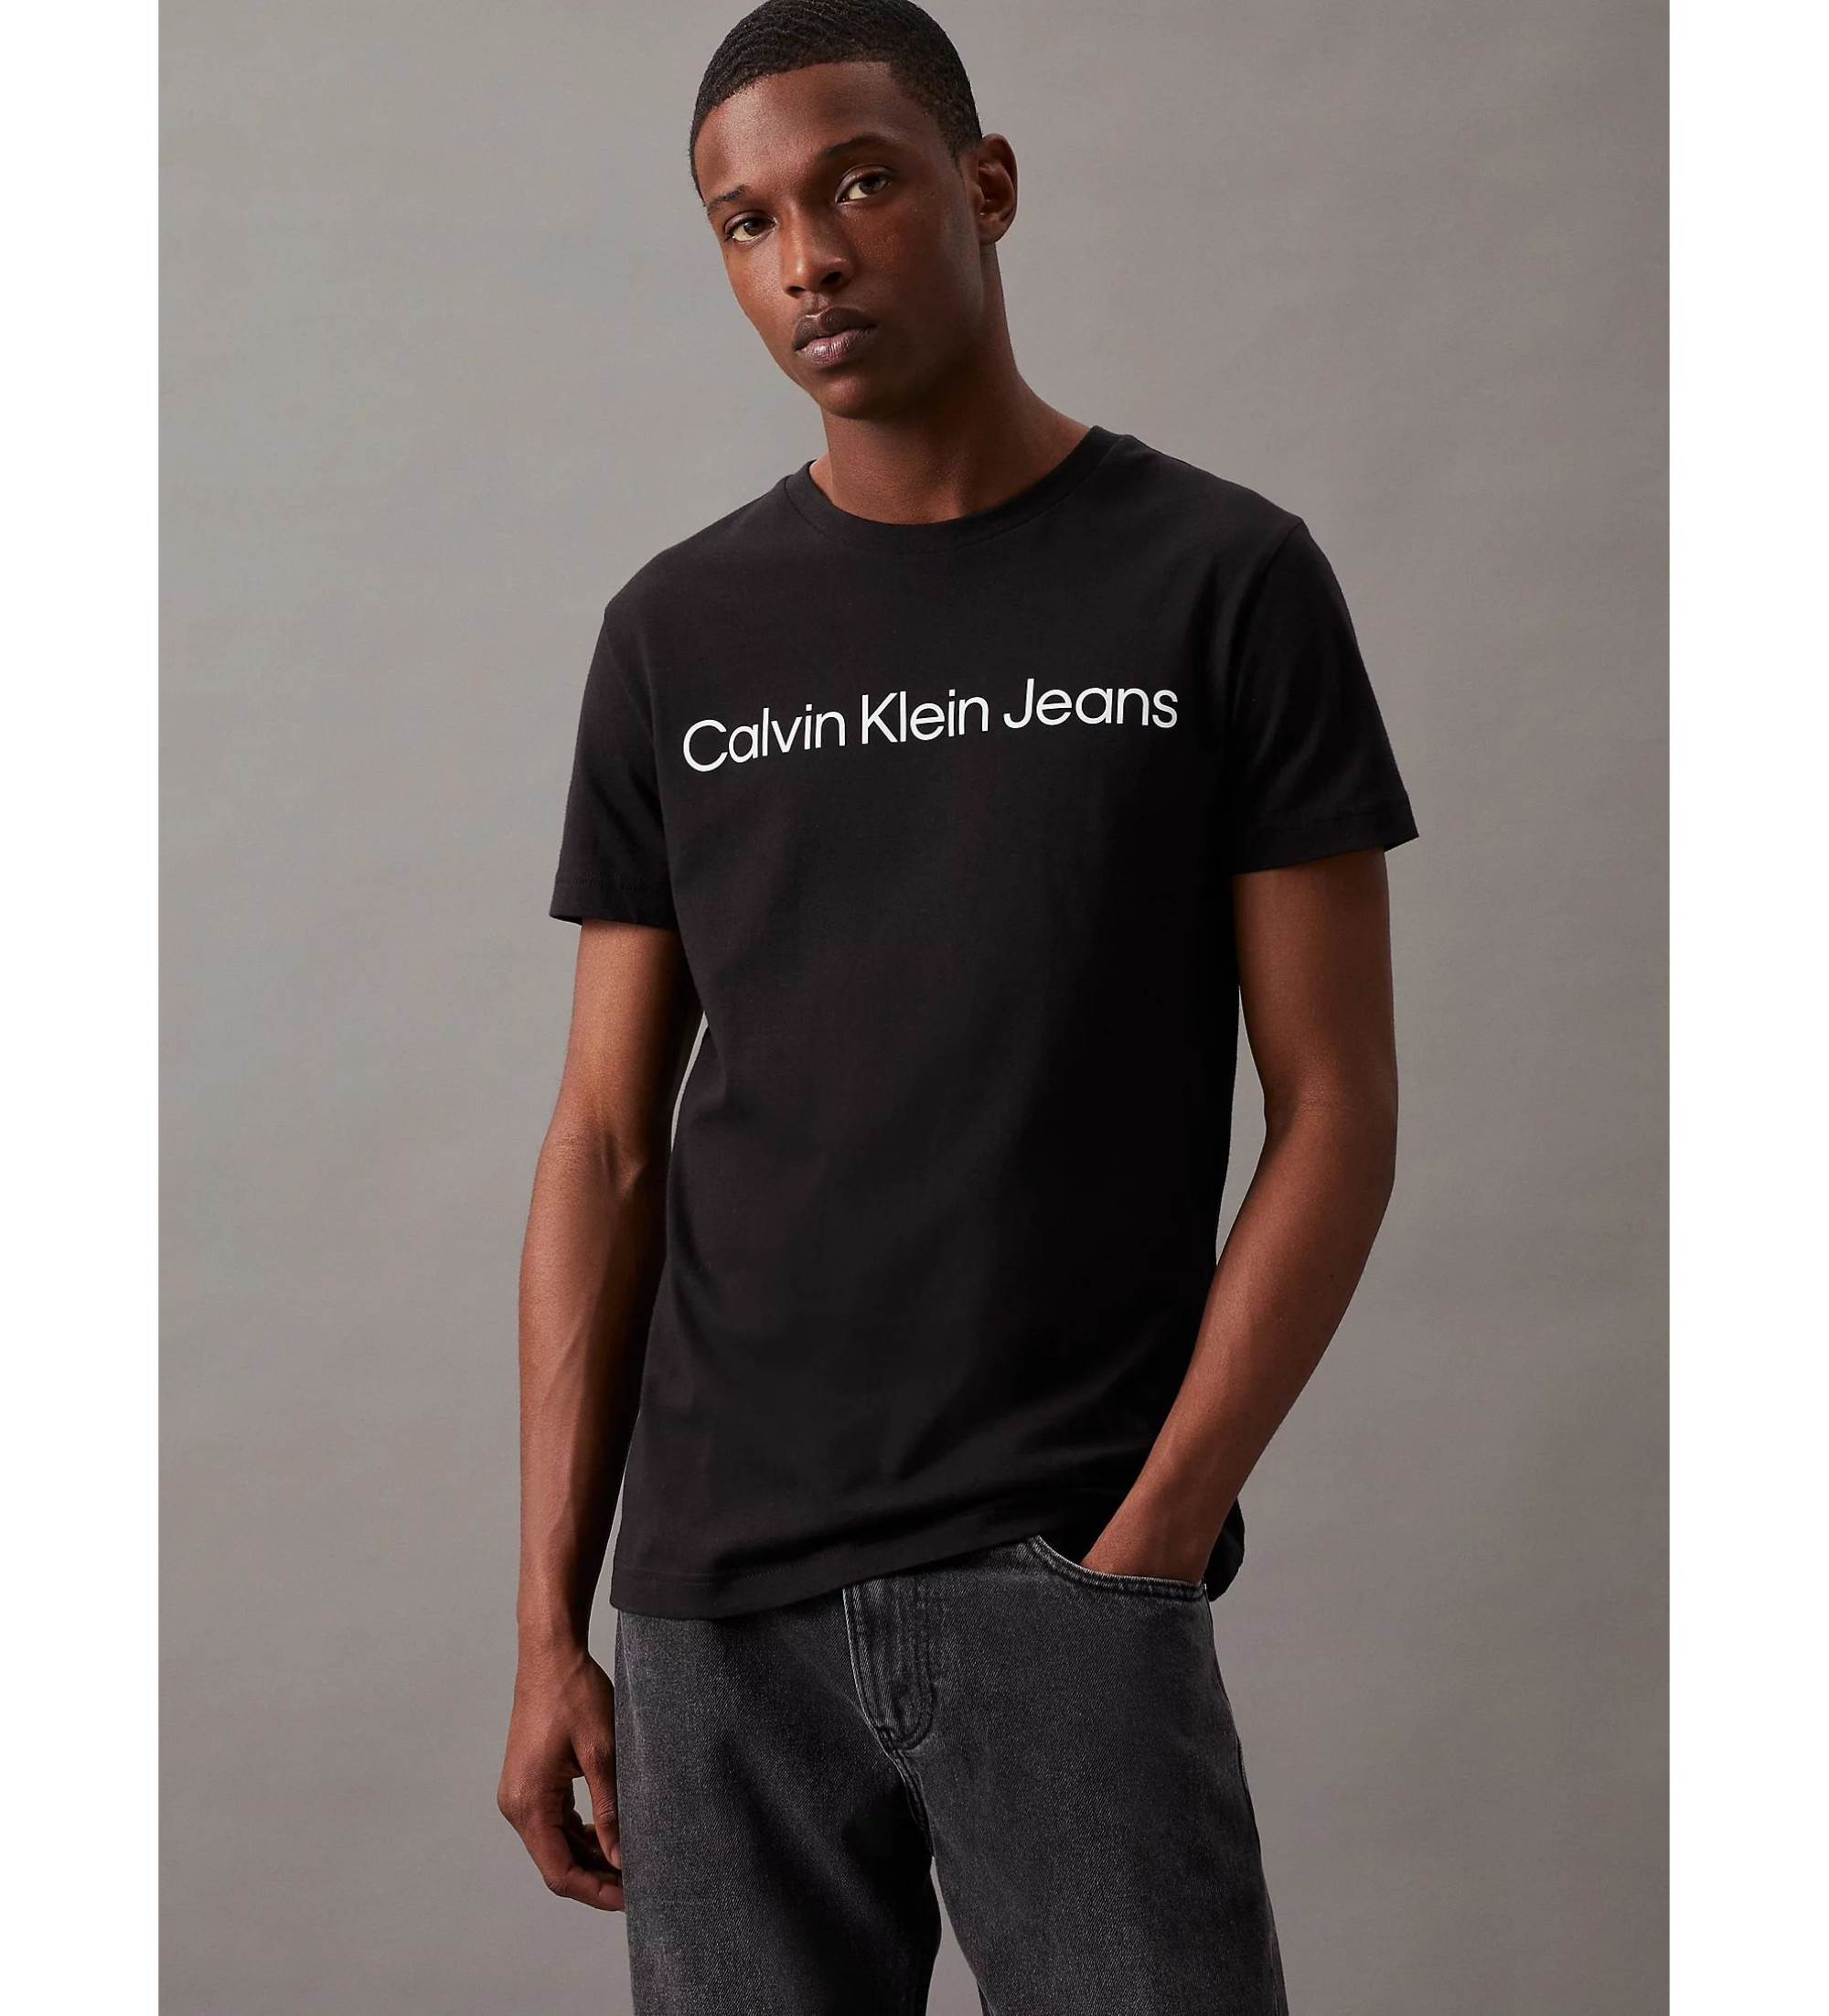 https://assets.esdemarca.com/beta/var/images1000/calvin-klein-jeans-camiseta-slim-logo-negro-j30j322552-3001915-a.jpg